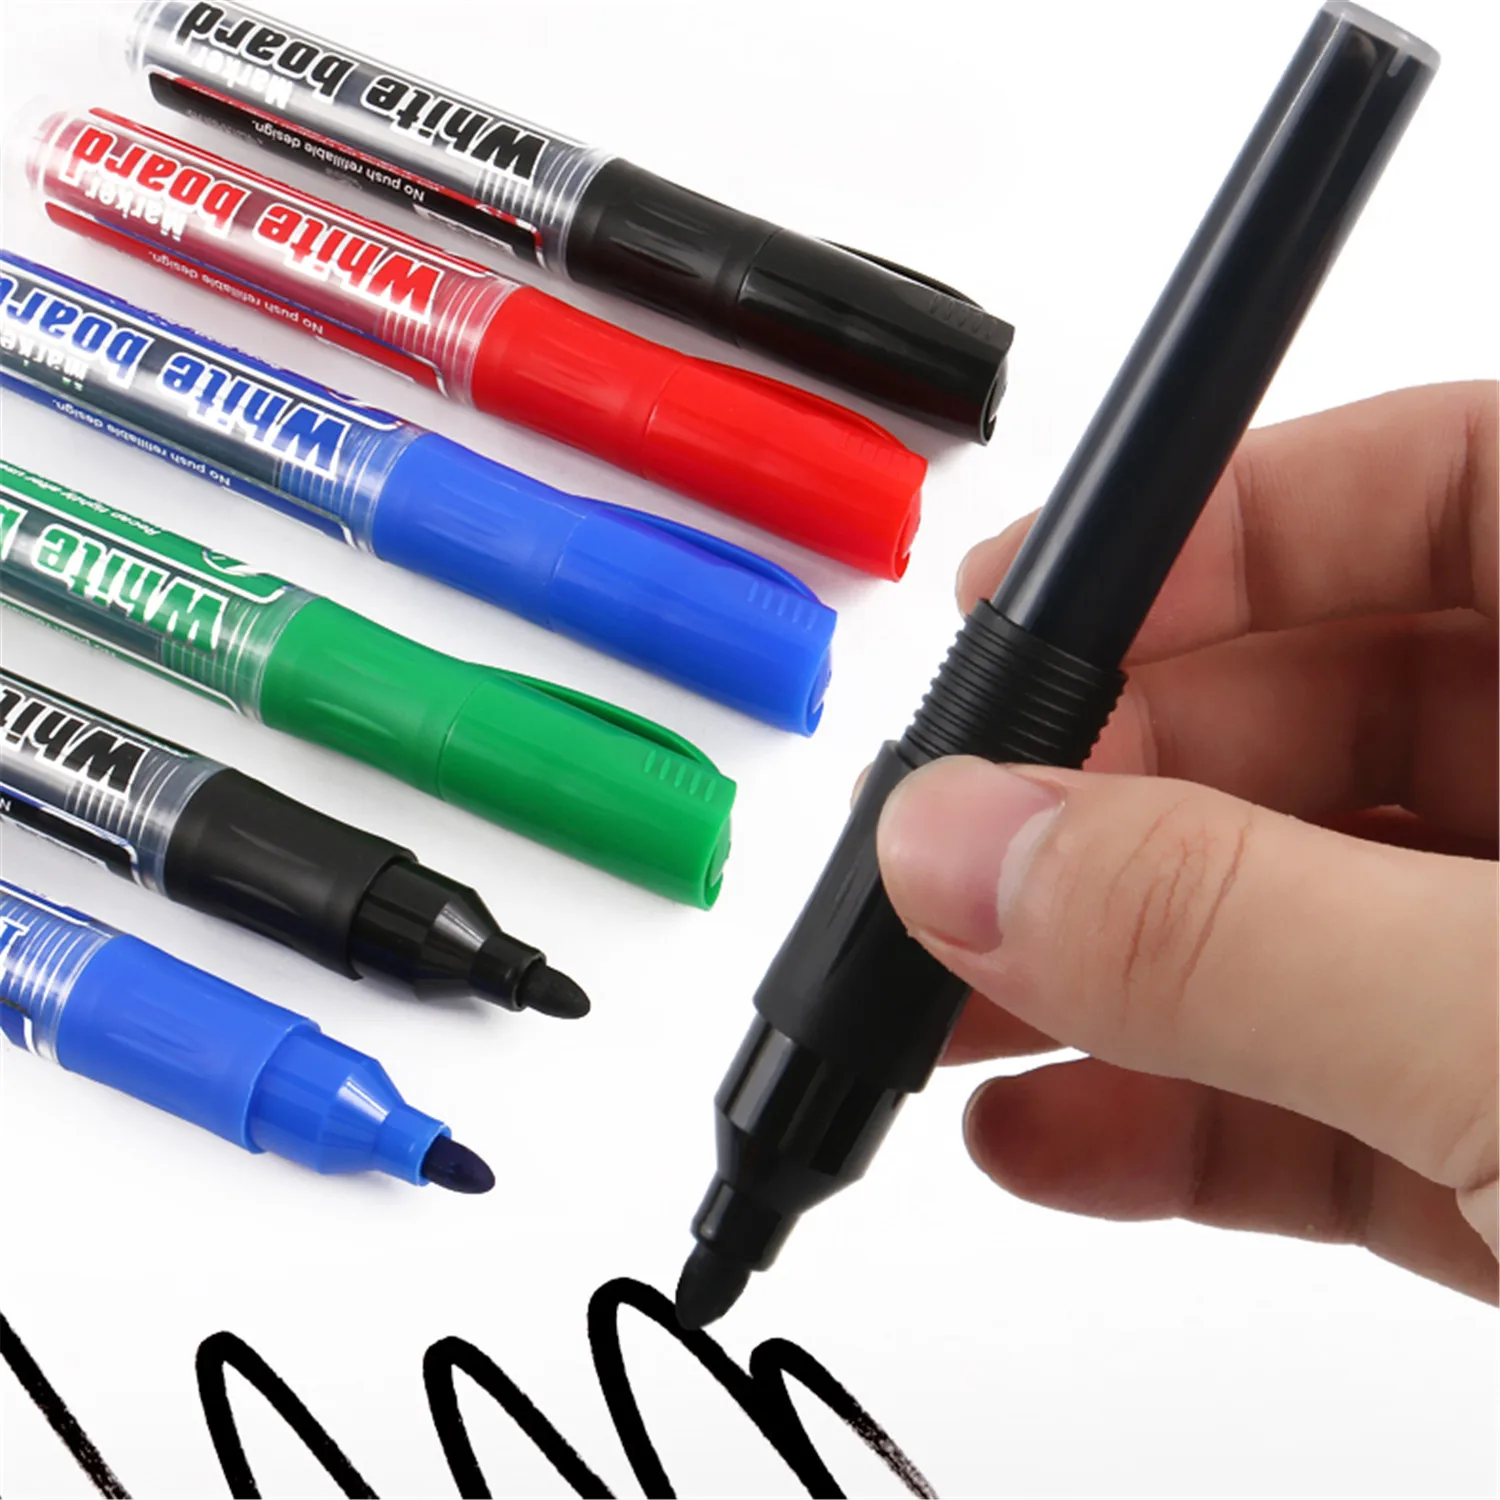 

12pcs/set Erasable Whiteboard Marker Set Pen Dry-Erase Sign Ink Refillable Office School Supplies Student Gift Black Blue Red